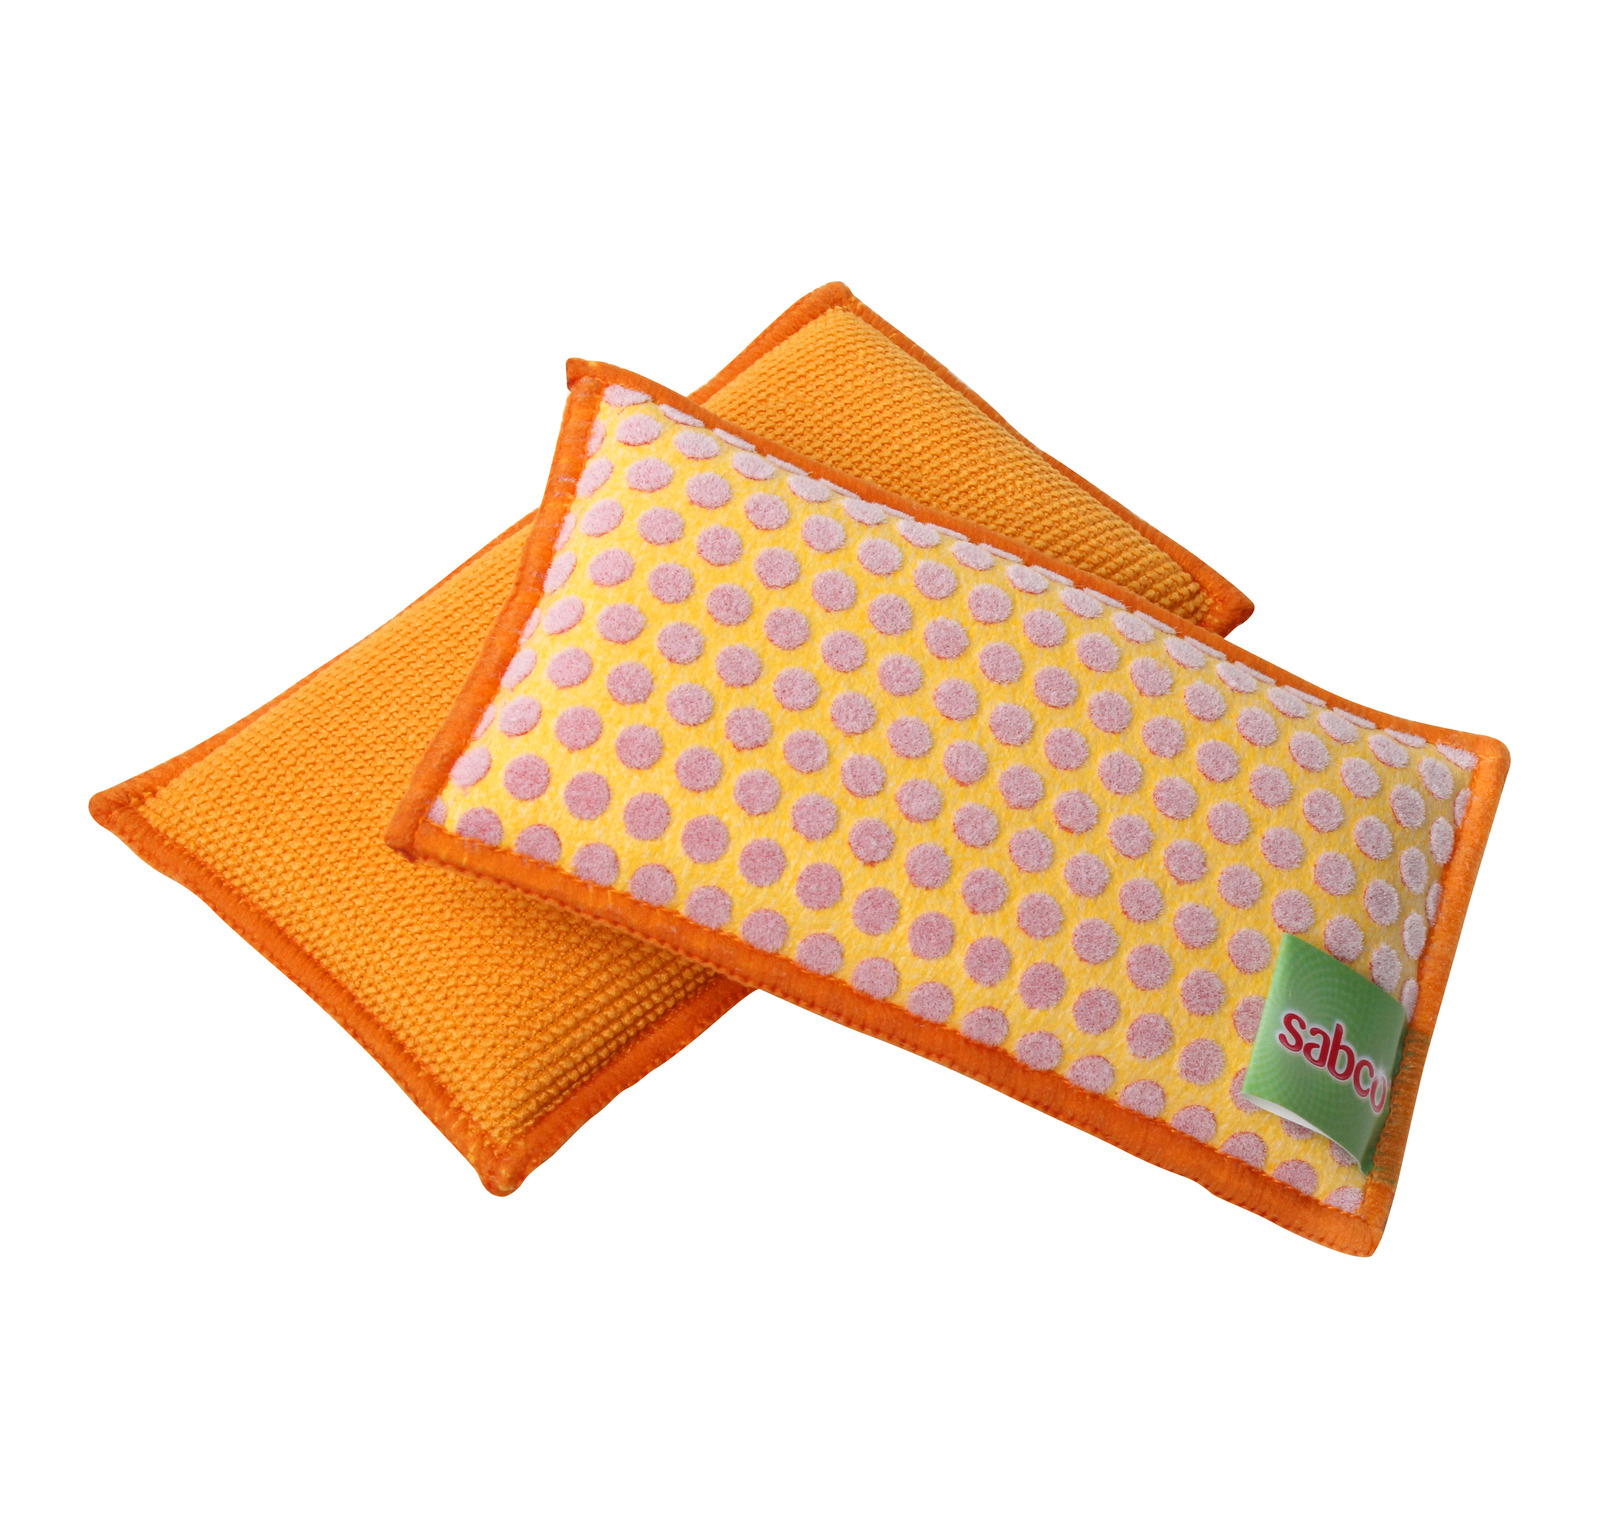 Buy Two Pack Kitchen Sponge Cloth - Sabco